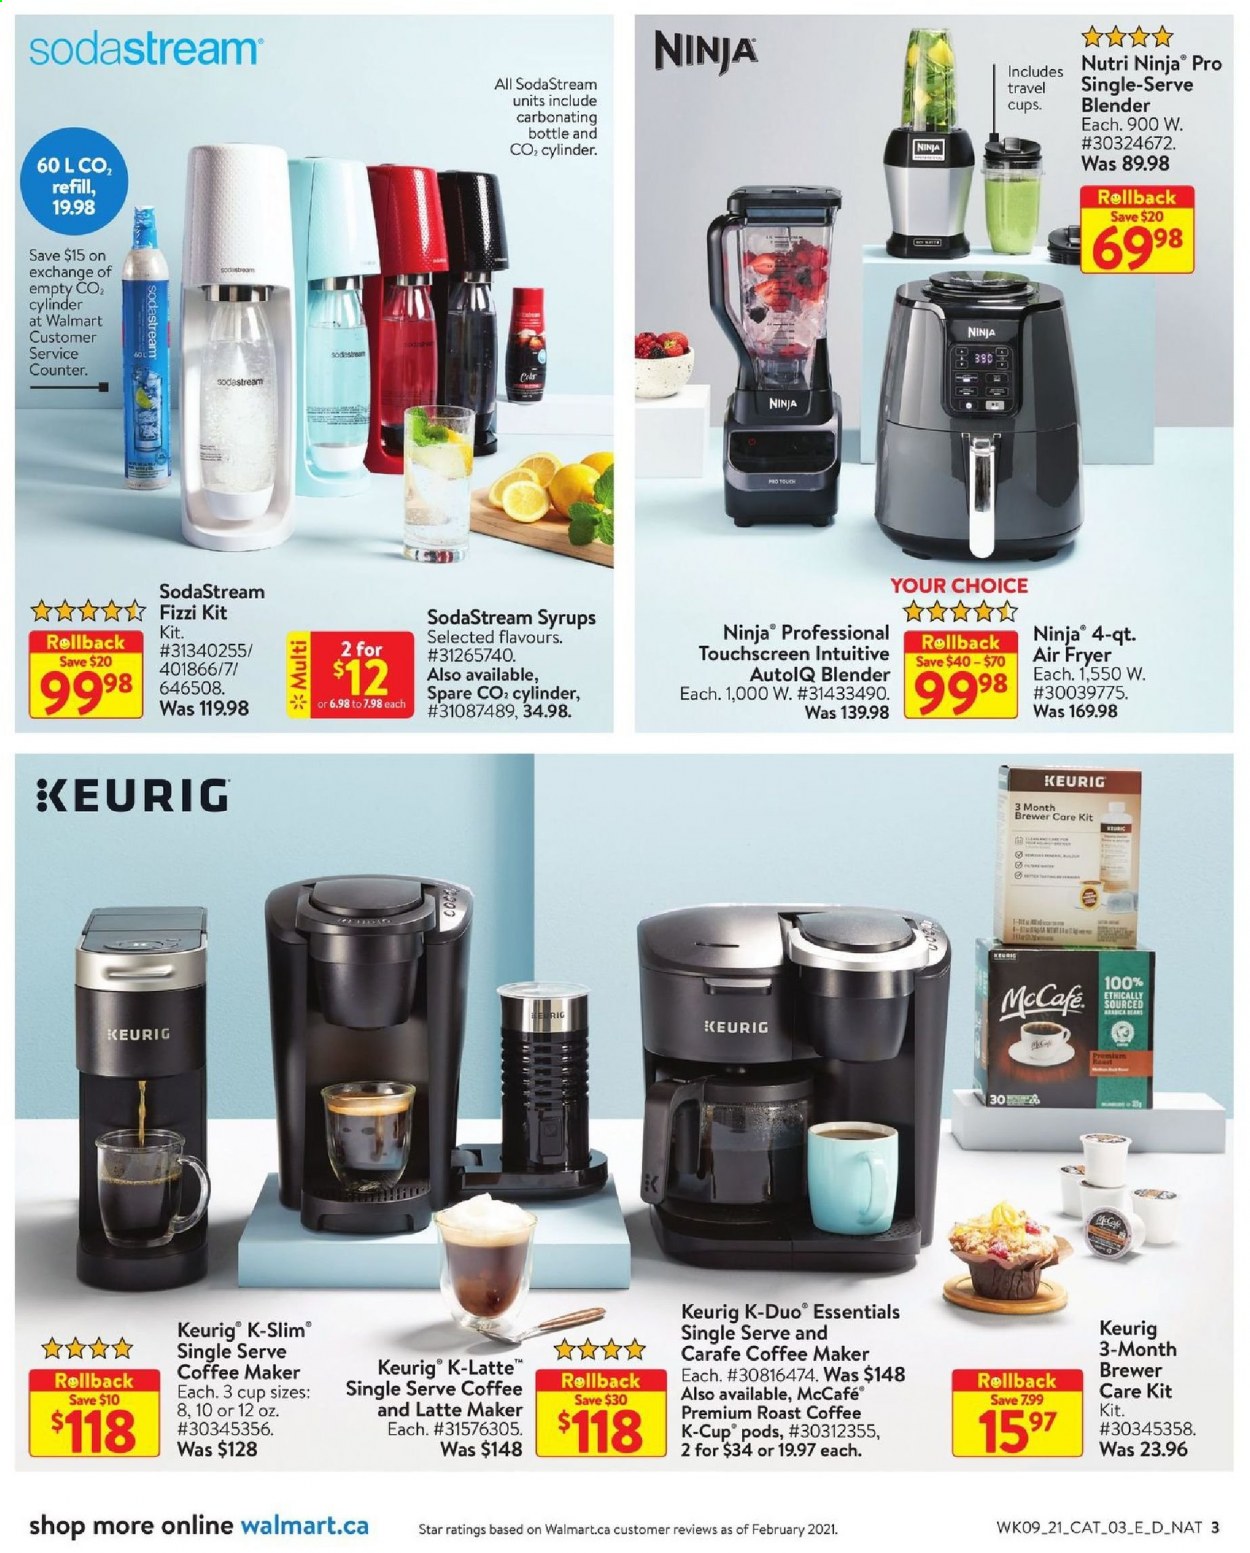 thumbnail - Walmart Flyer - March 25, 2021 - April 21, 2021 - Sales products - brewer, coffee capsules, McCafe, K-Cups, Keurig, bijzettafel, SodaStream, coffee machine, air fryer, cap. Page 3.